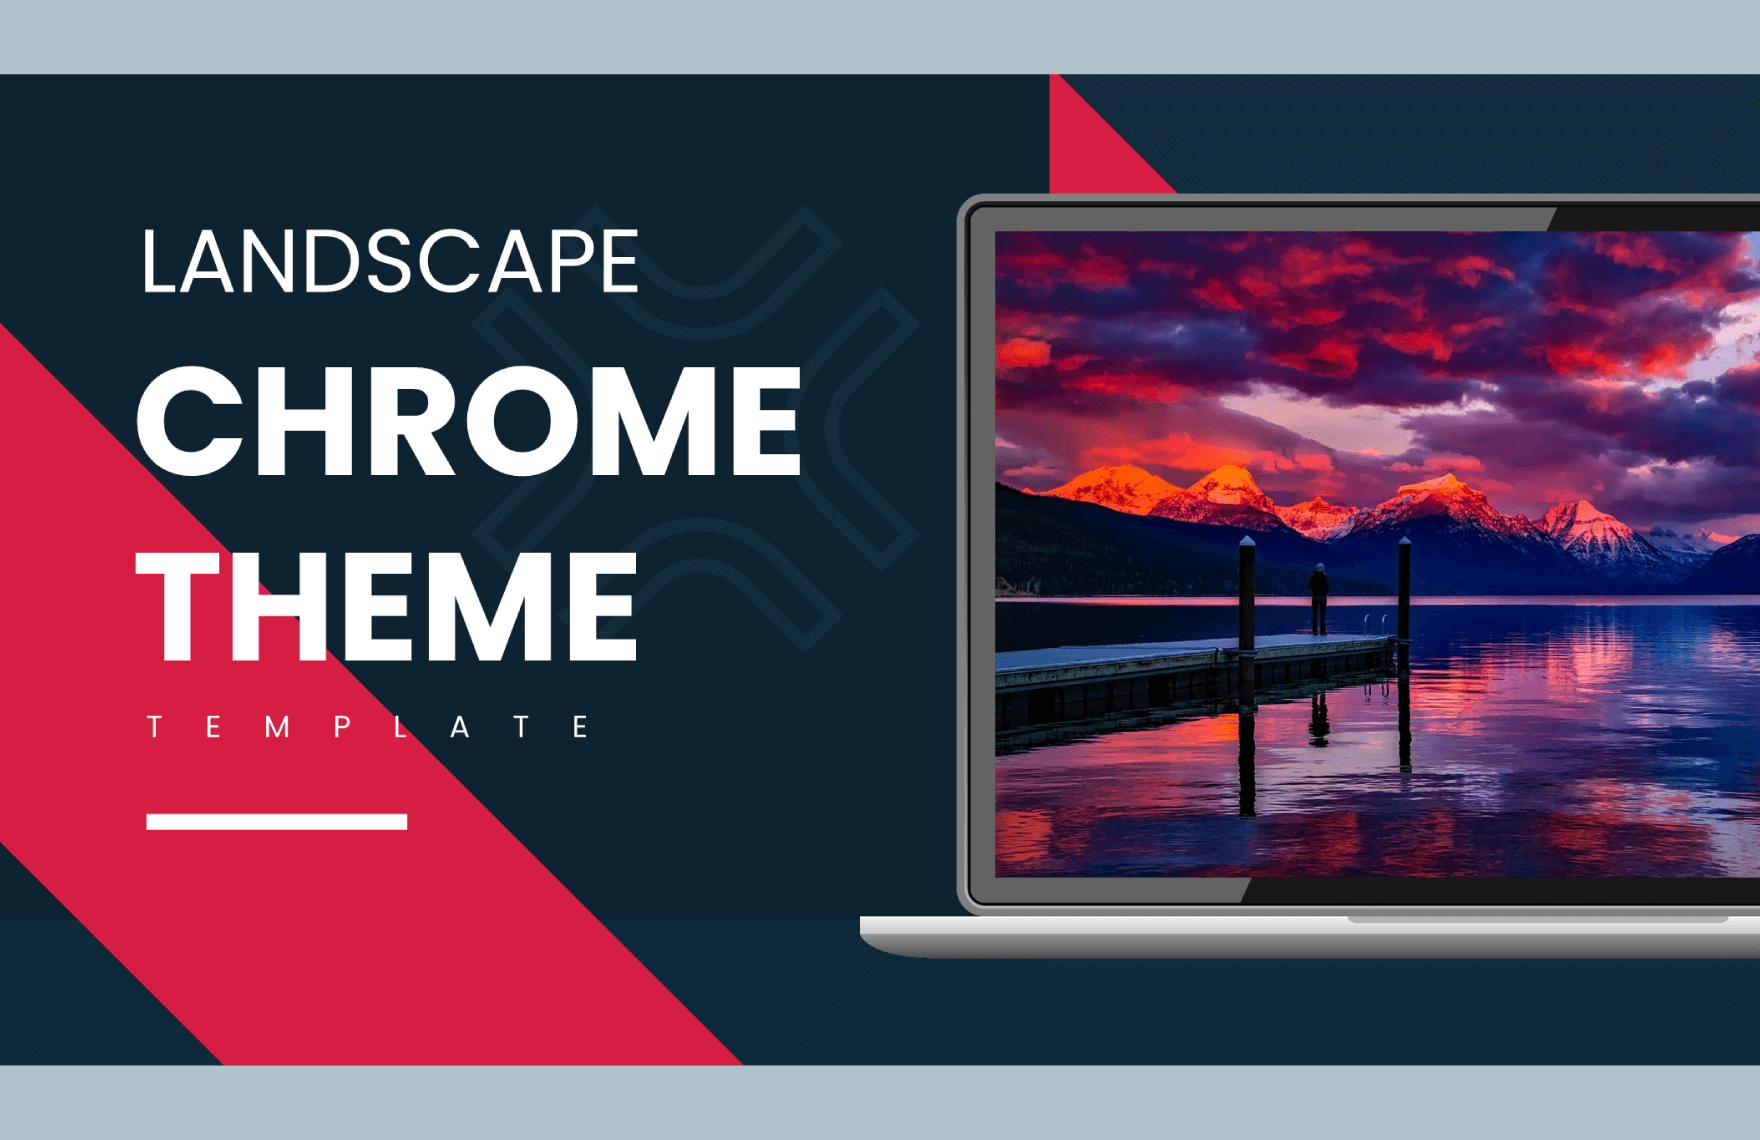 Landscape Chrome Themes Template